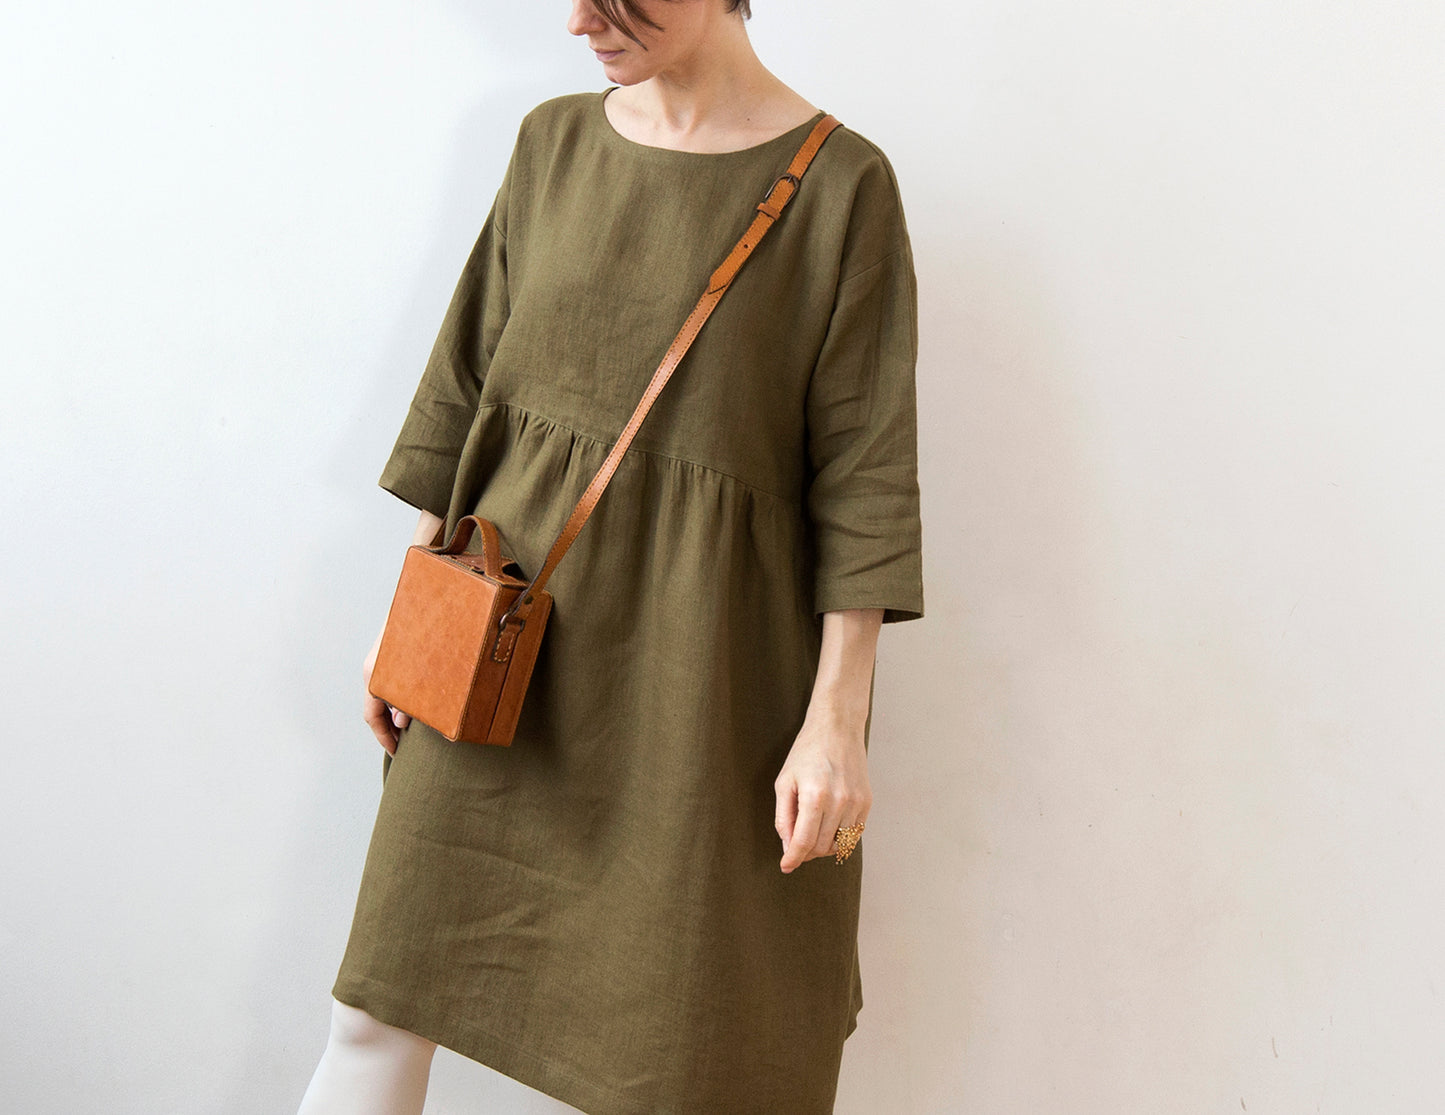 Olive green linen dress (knee length)